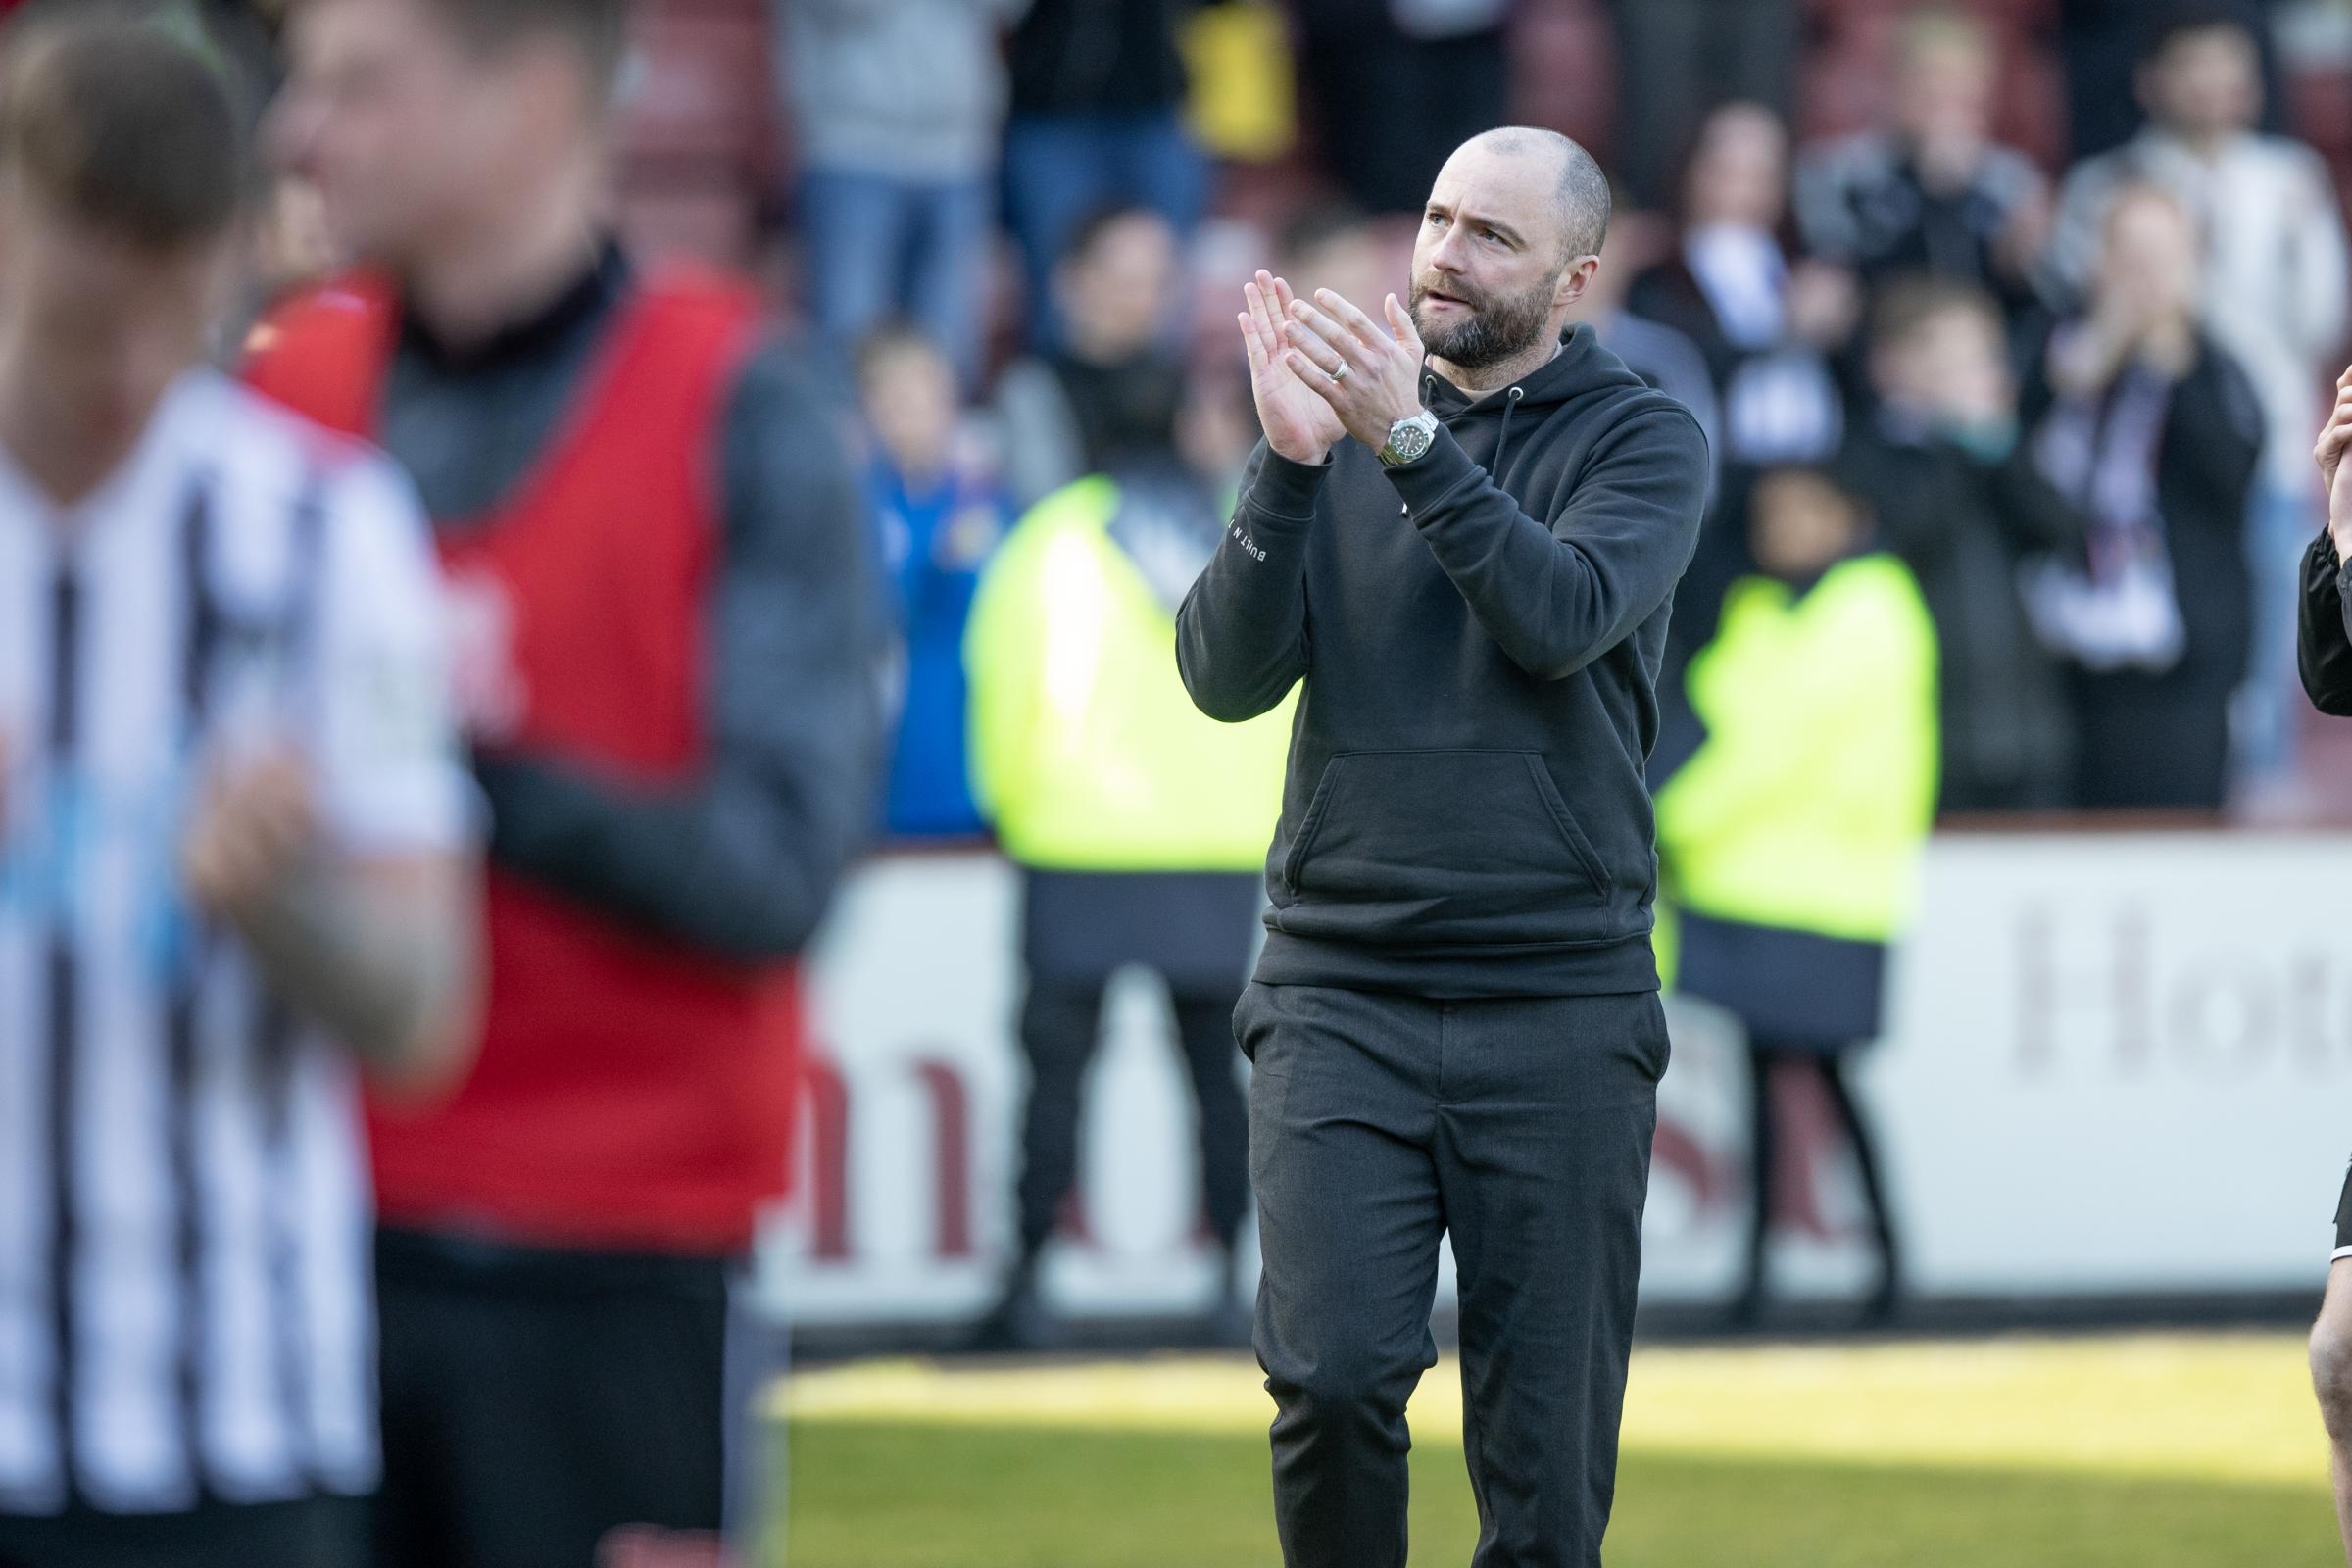 Dunfermline boss James McPake discusses plans for next season